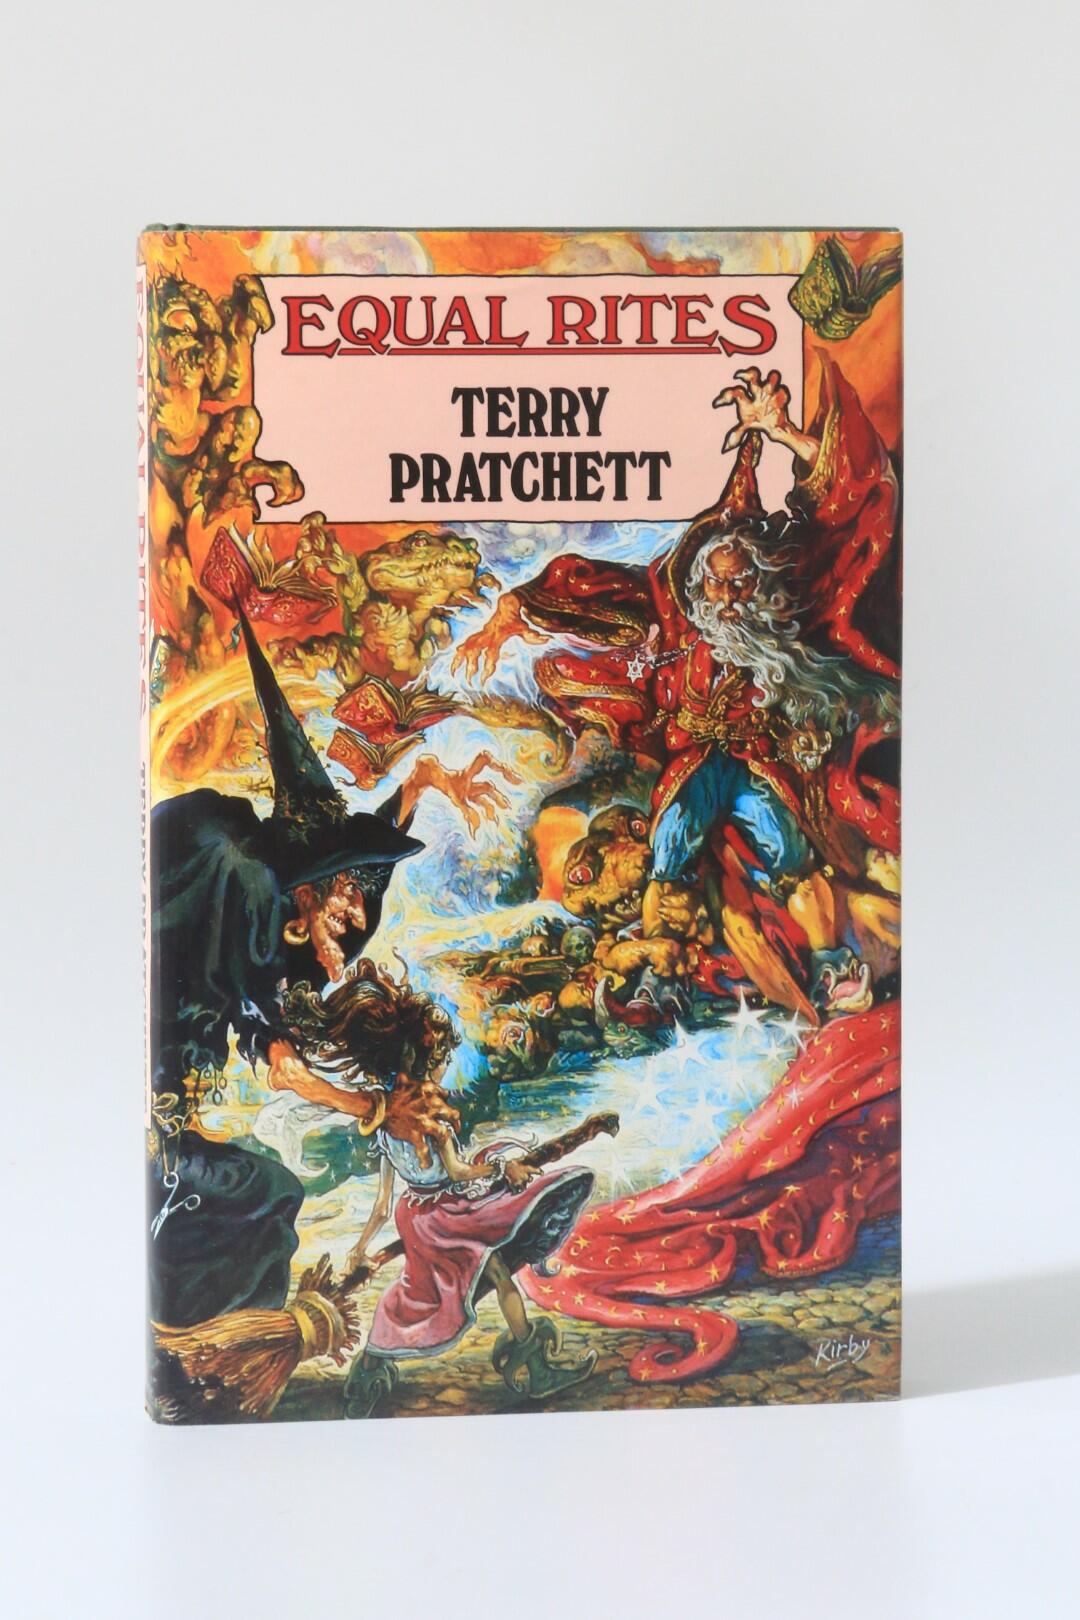 Terry Pratchett - Equal Rites - Gollancz, 1987, First Edition.